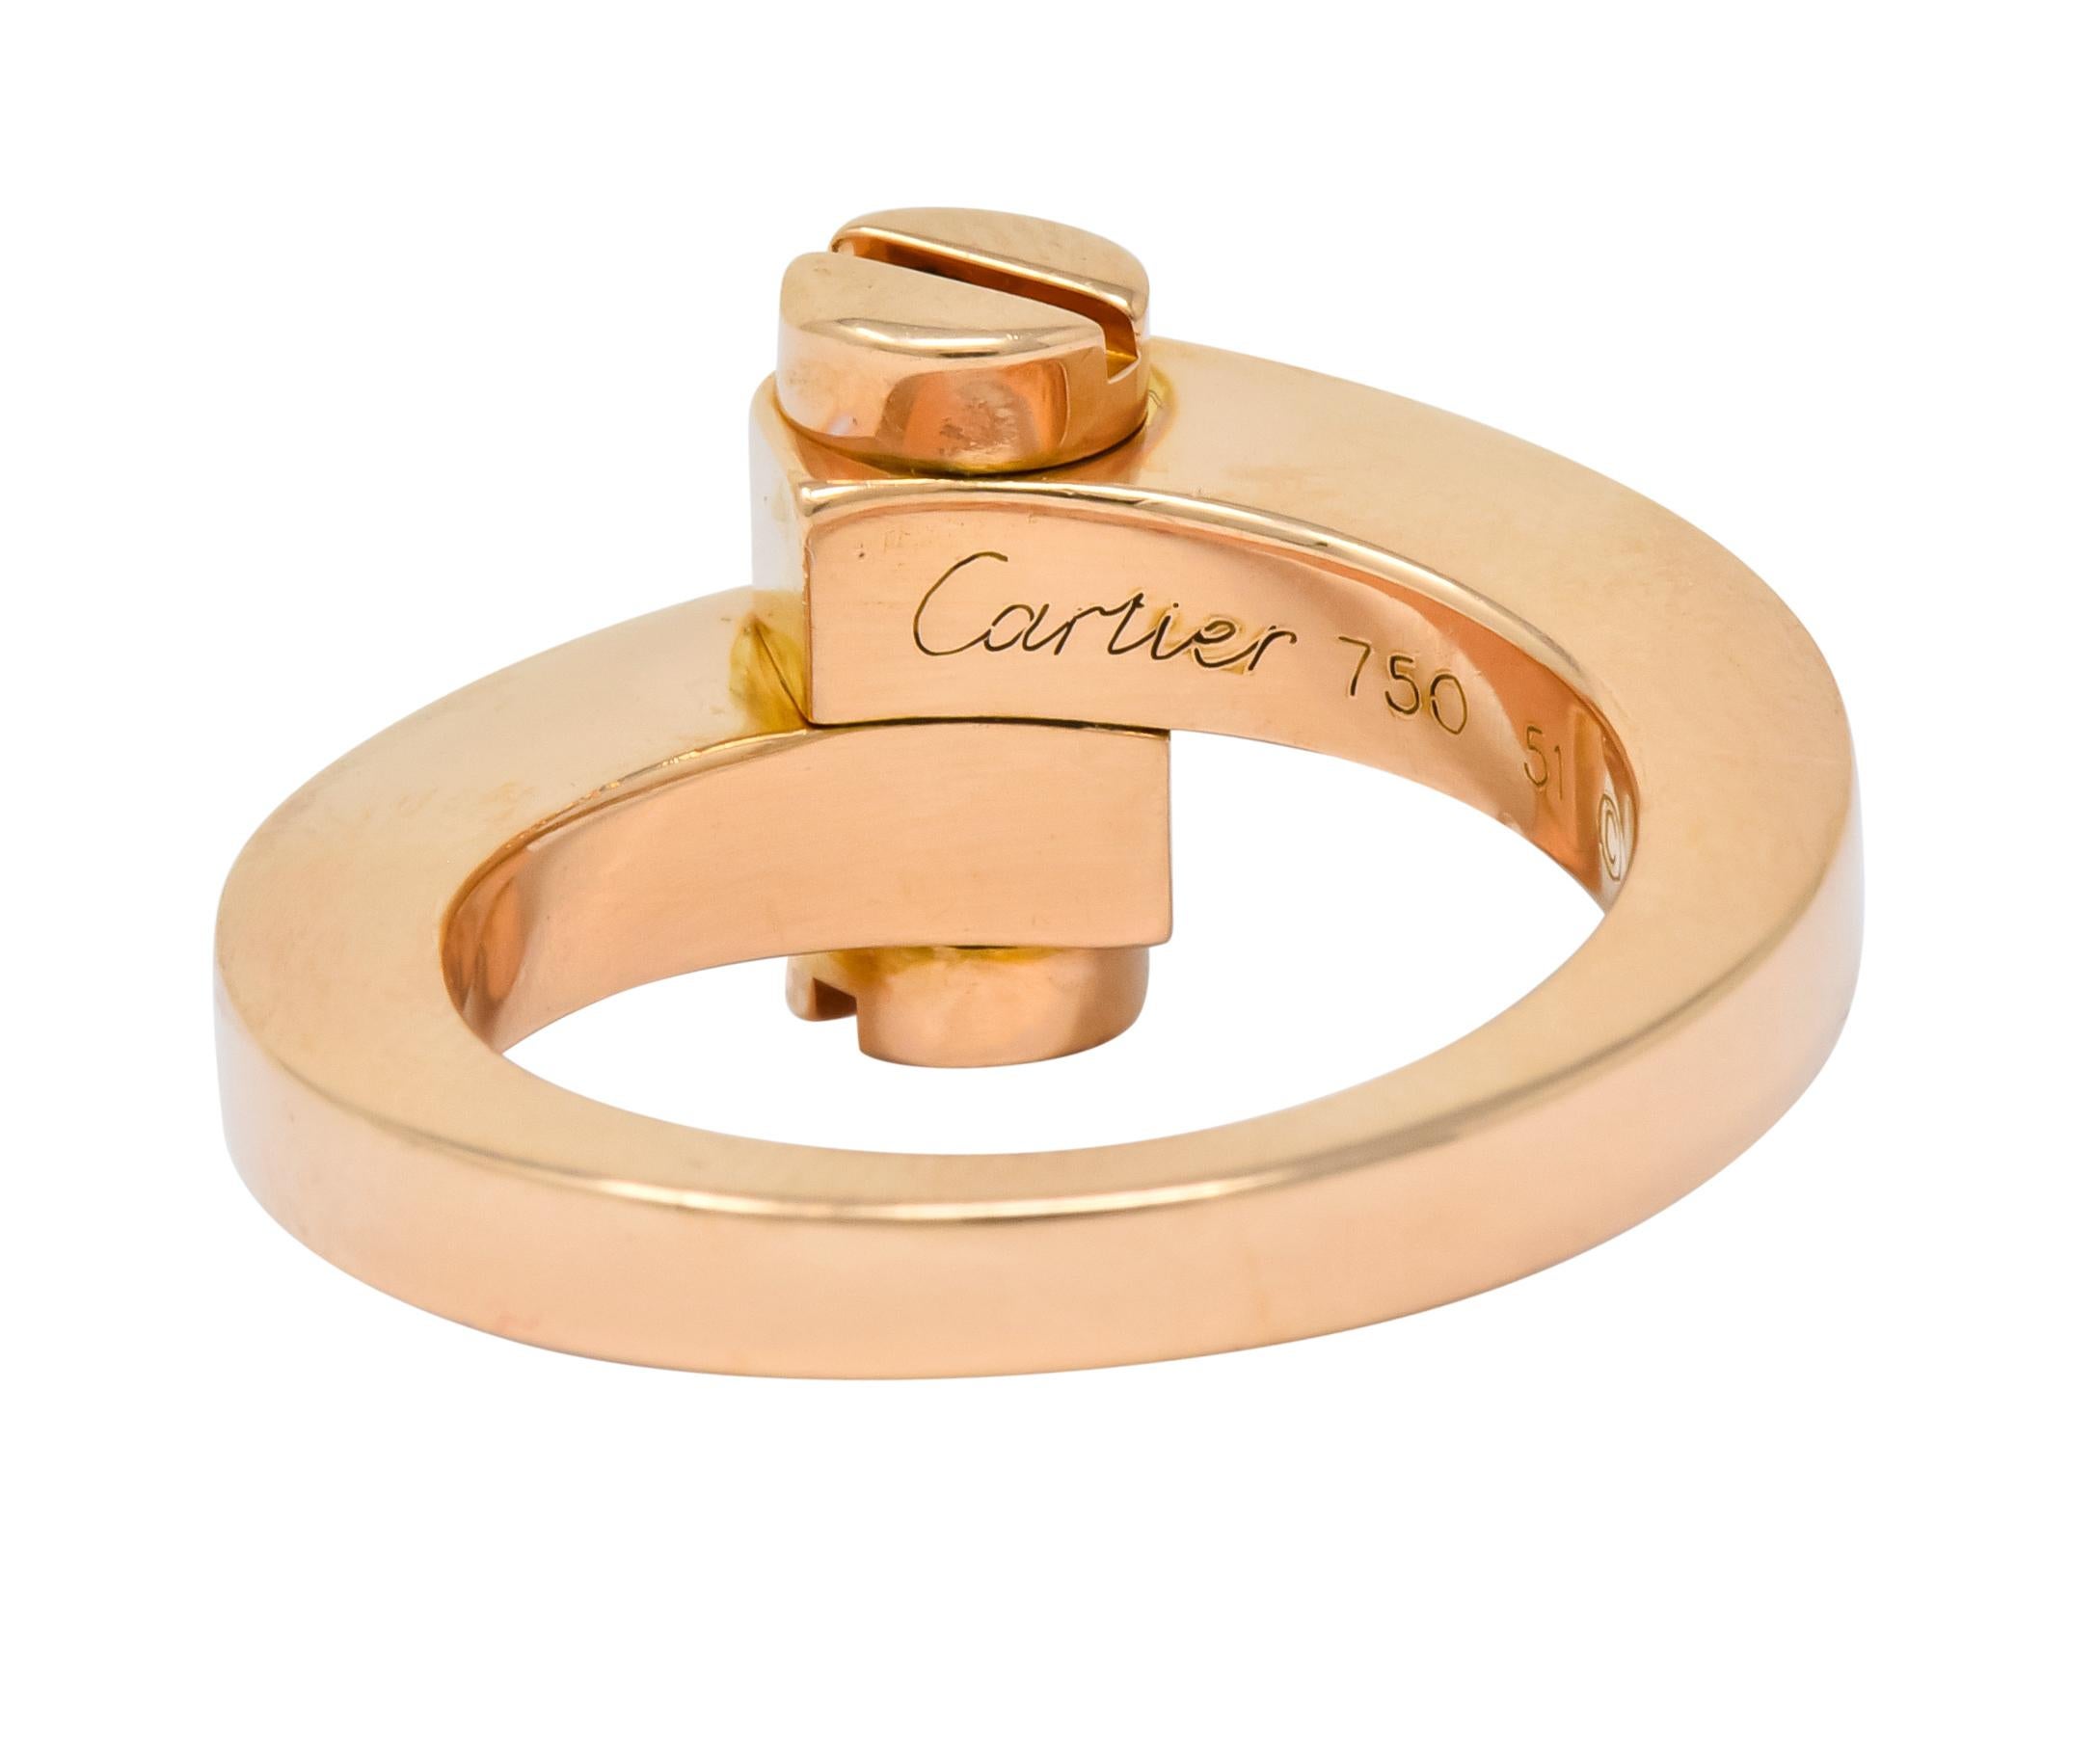 Contemporary Cartier 18 Karat Rose Gold Menotte Bypass Band Ring, circa 1990s